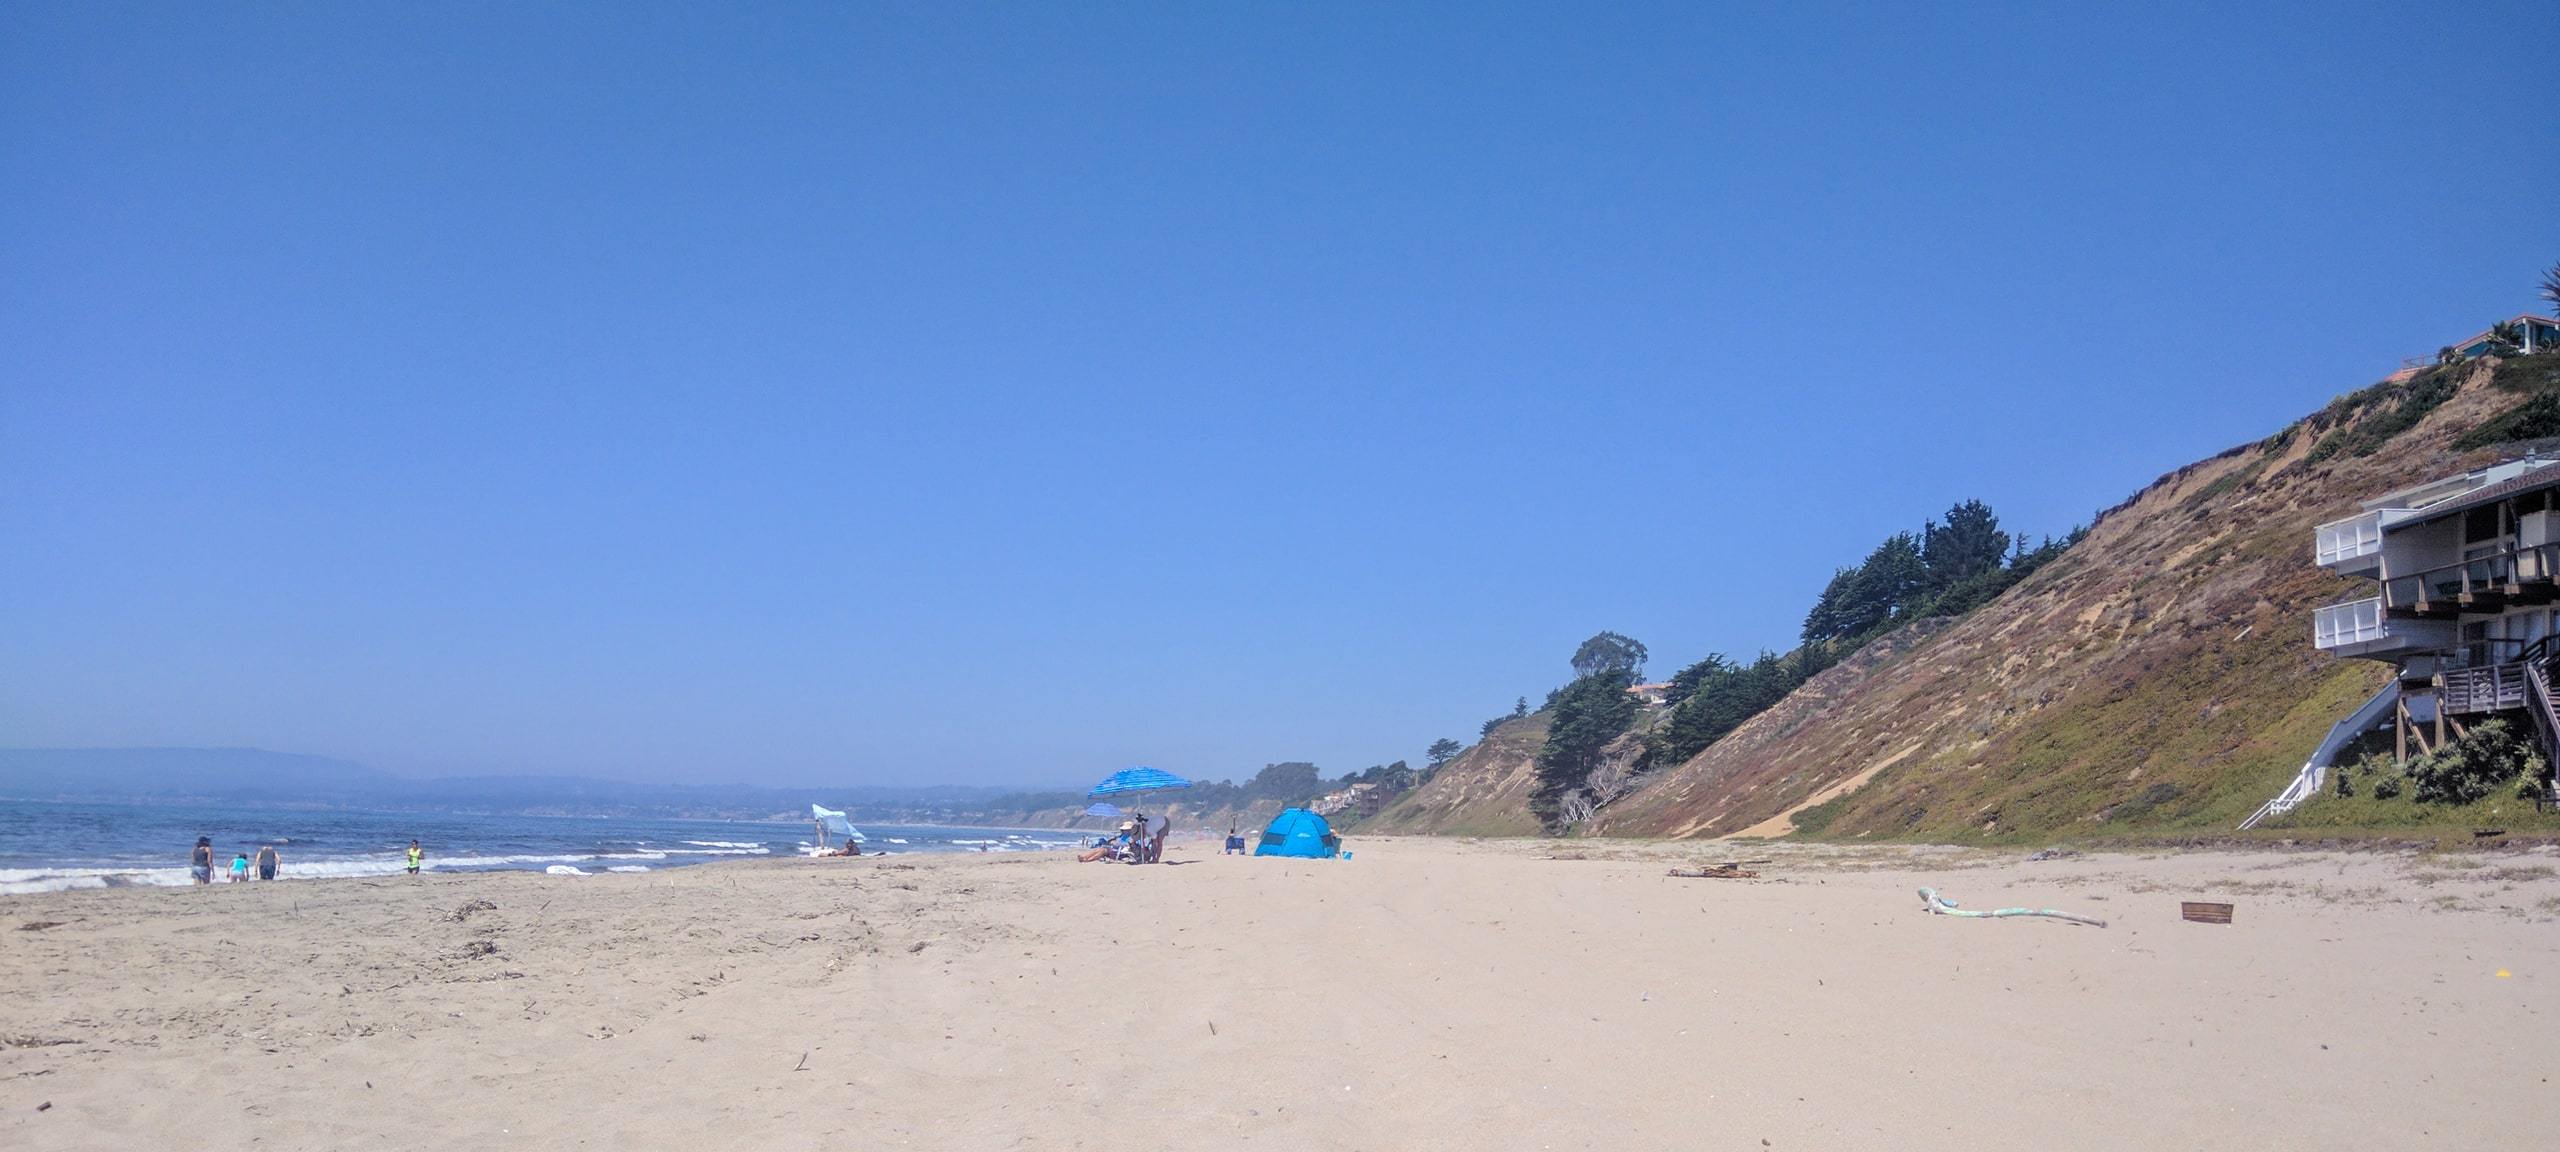 Beachgoers at Manresa Main State Beach, La Selva Beach, CA